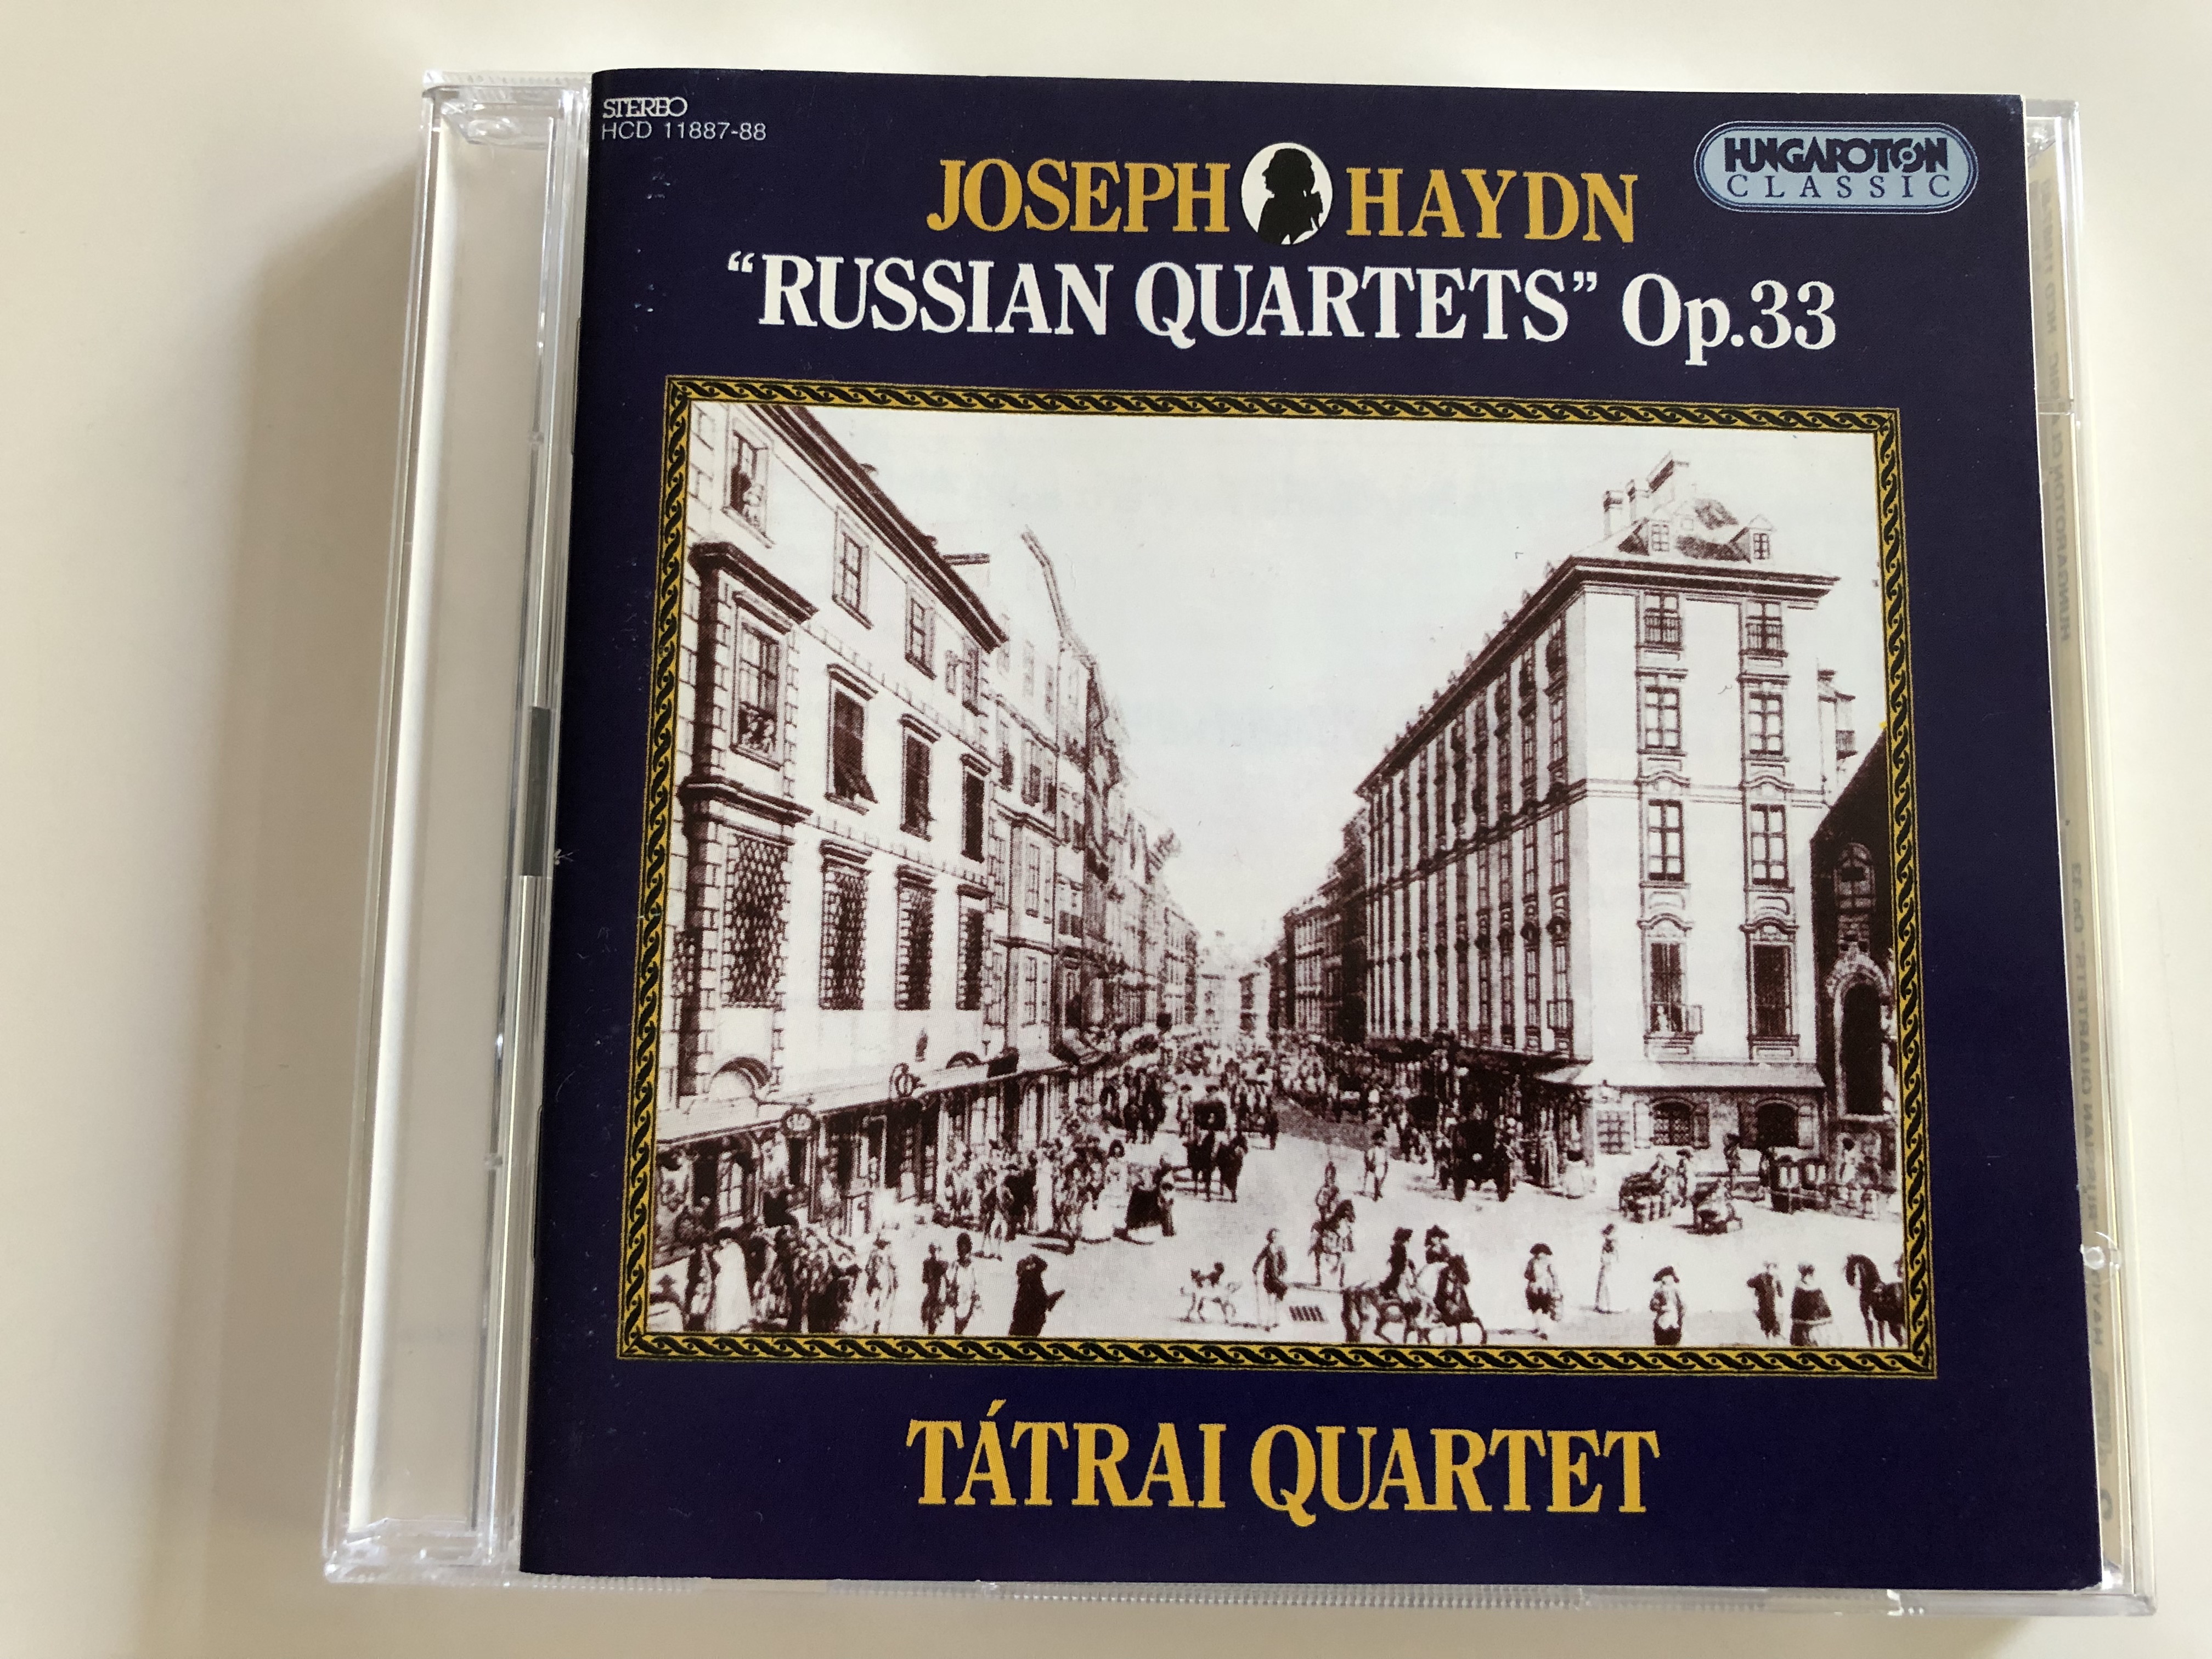 joseph-haydn-russian-quartets-op.-33-t-trai-quartet-hungaroton-classic-audio-cd-1994-hcd-11887-88-2-cd-1-.jpg